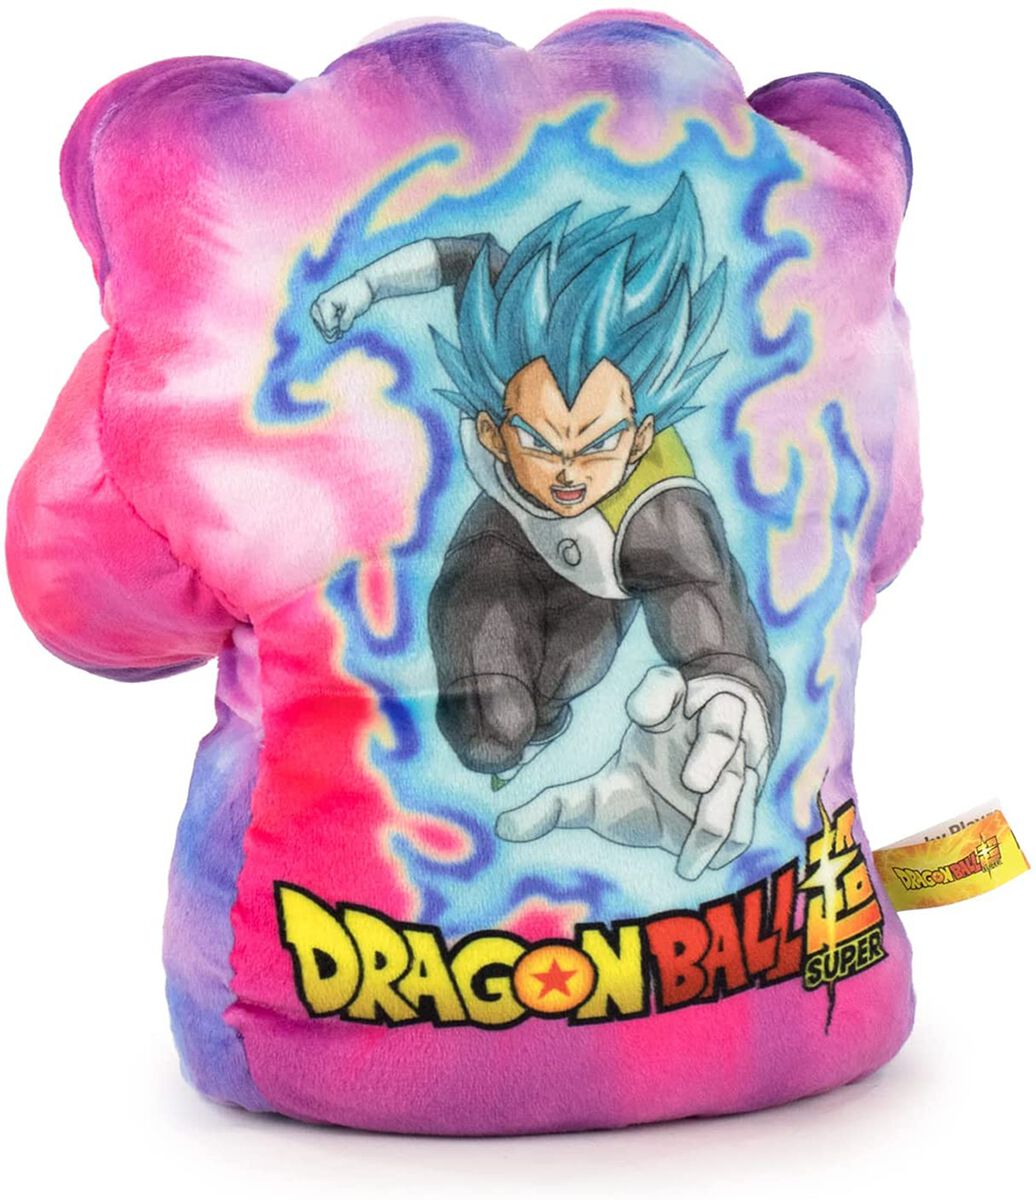 Dragon Ball Vegeta - Glove Stuffed Figurine multicolor